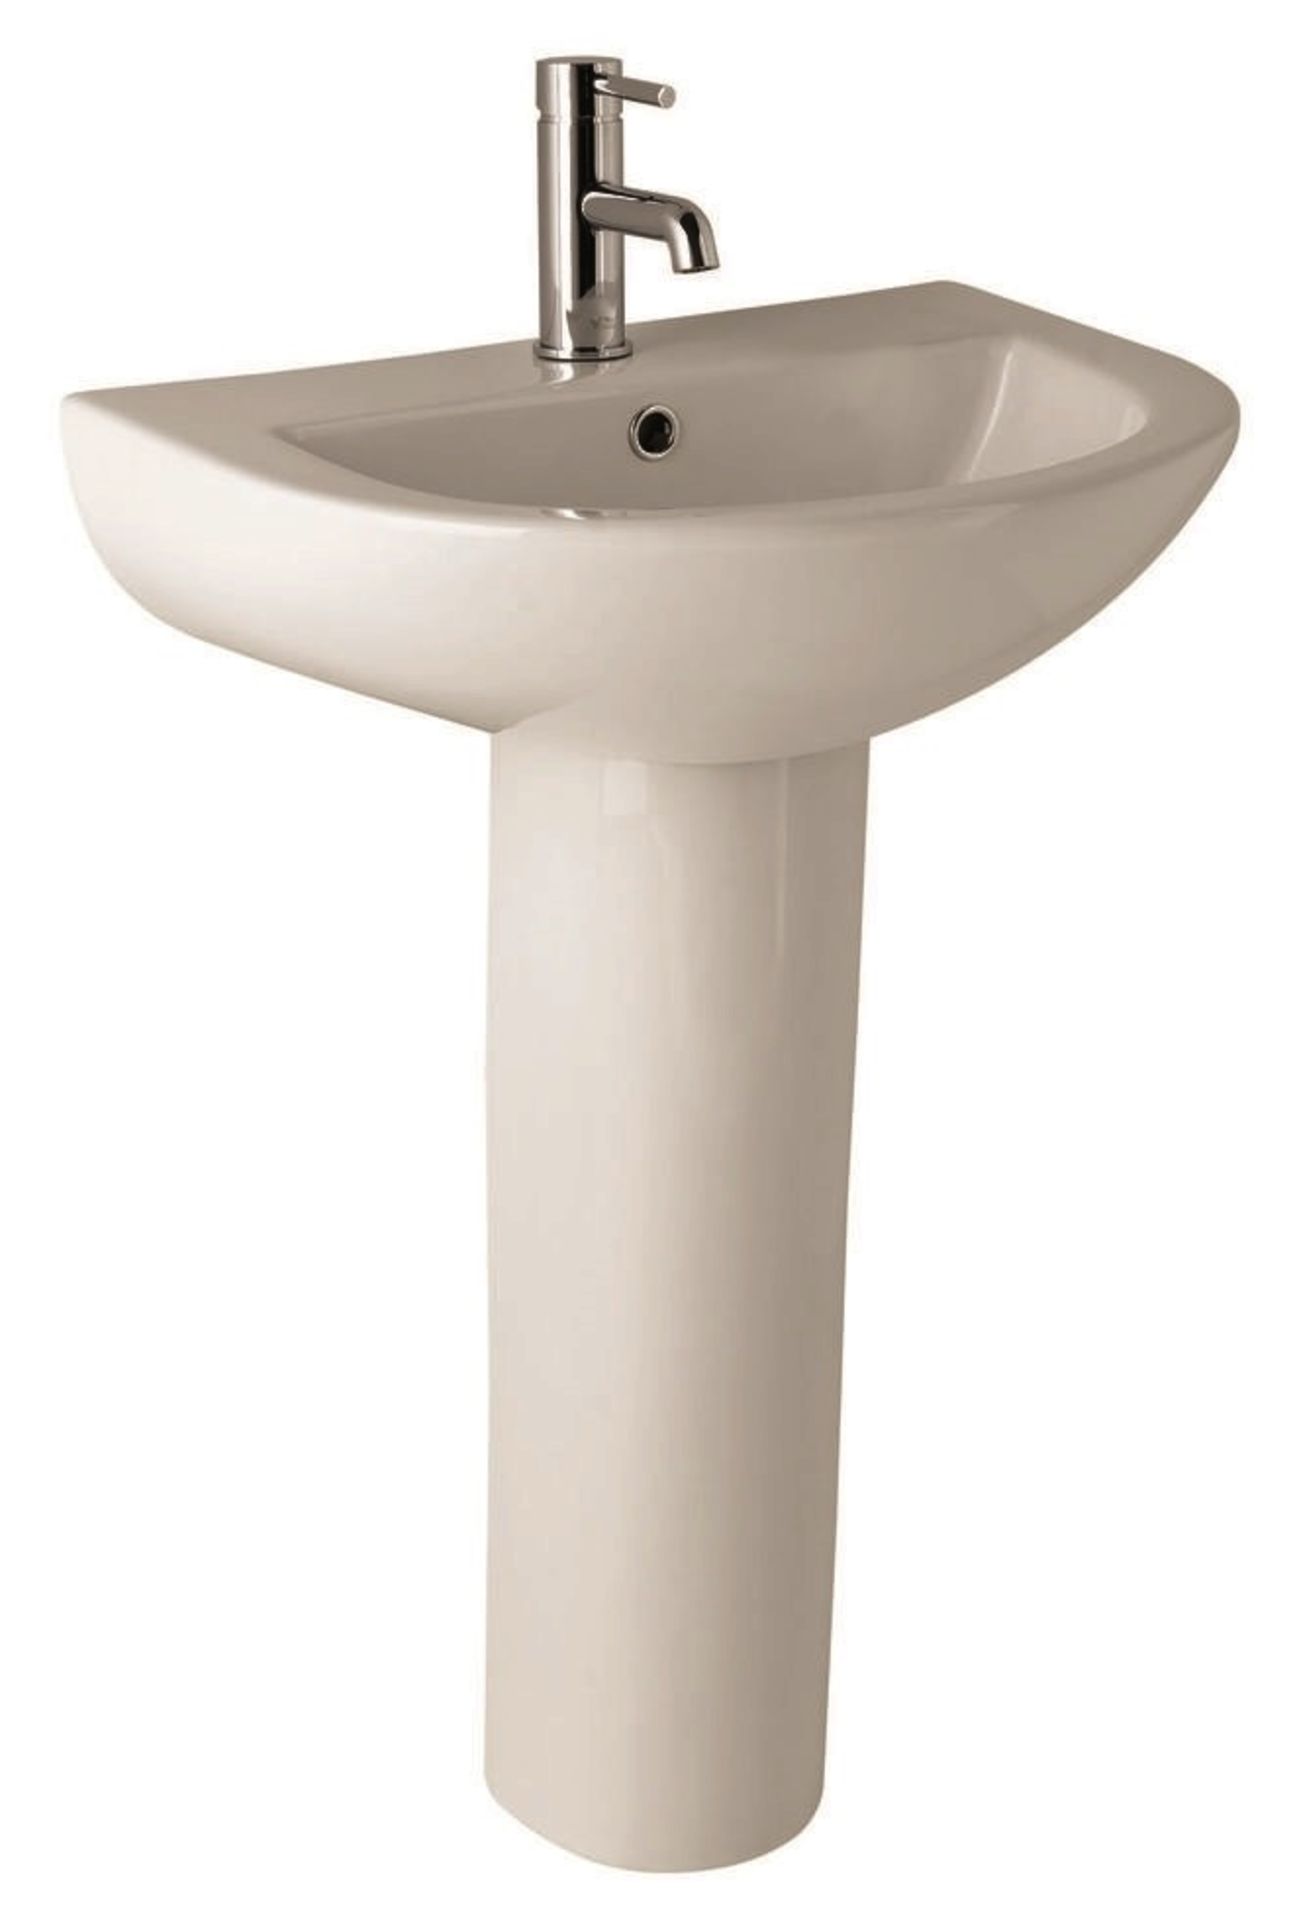 20 x Vogue Bathrooms COMFORT Single Tap Hole SINK BASINS With Pedestals - 600mm Width - Brand New